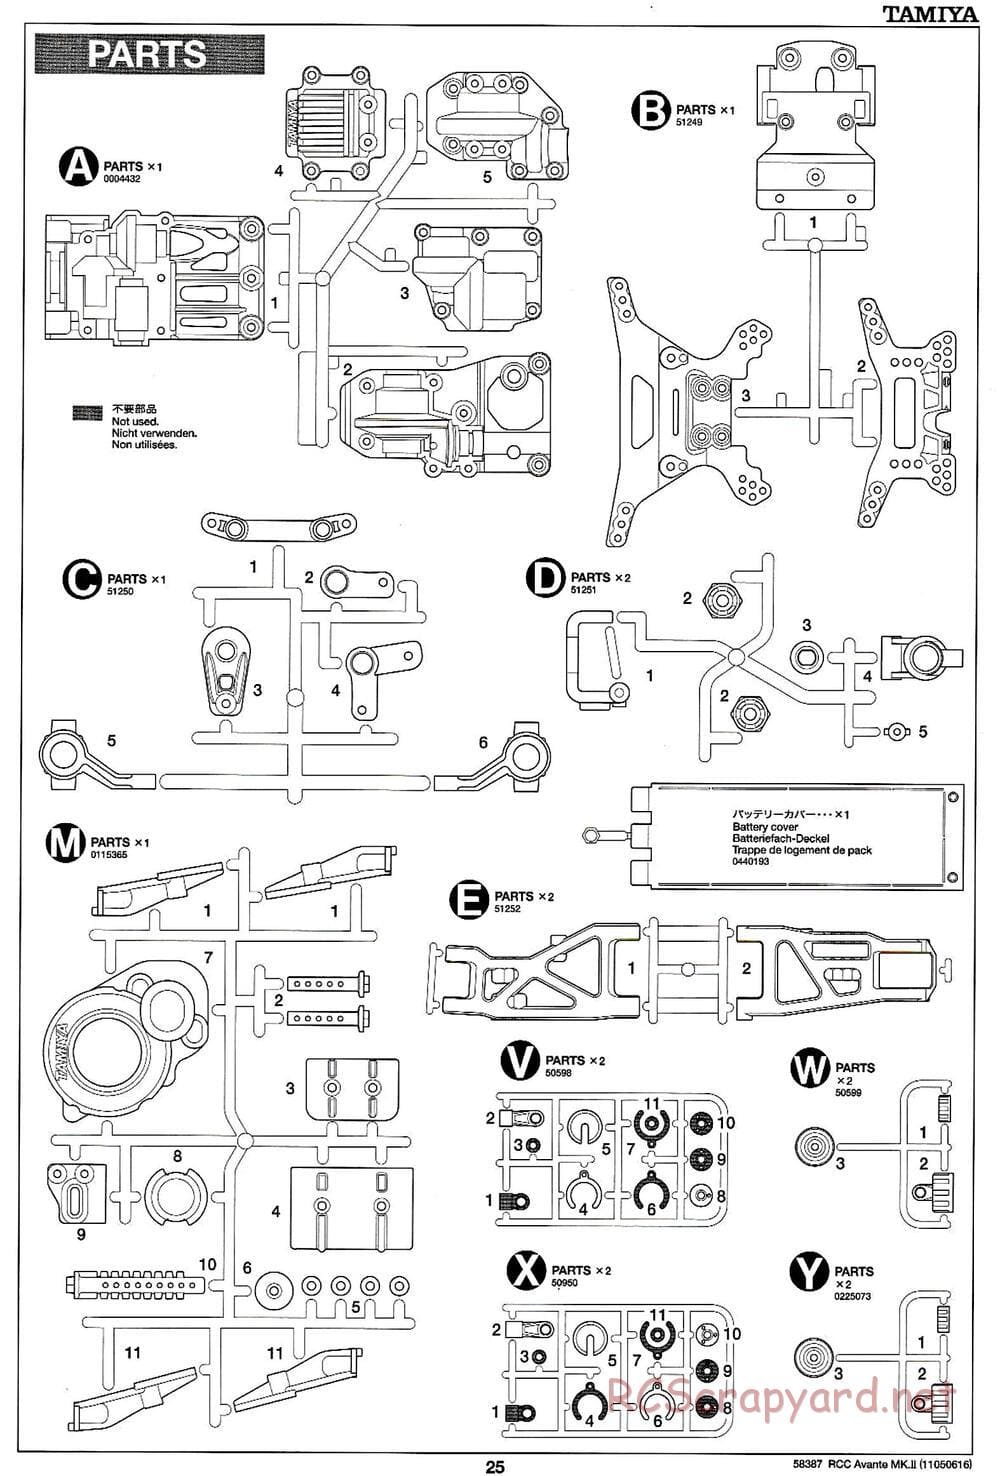 Tamiya - Avante Mk.II Chassis - Manual - Page 25